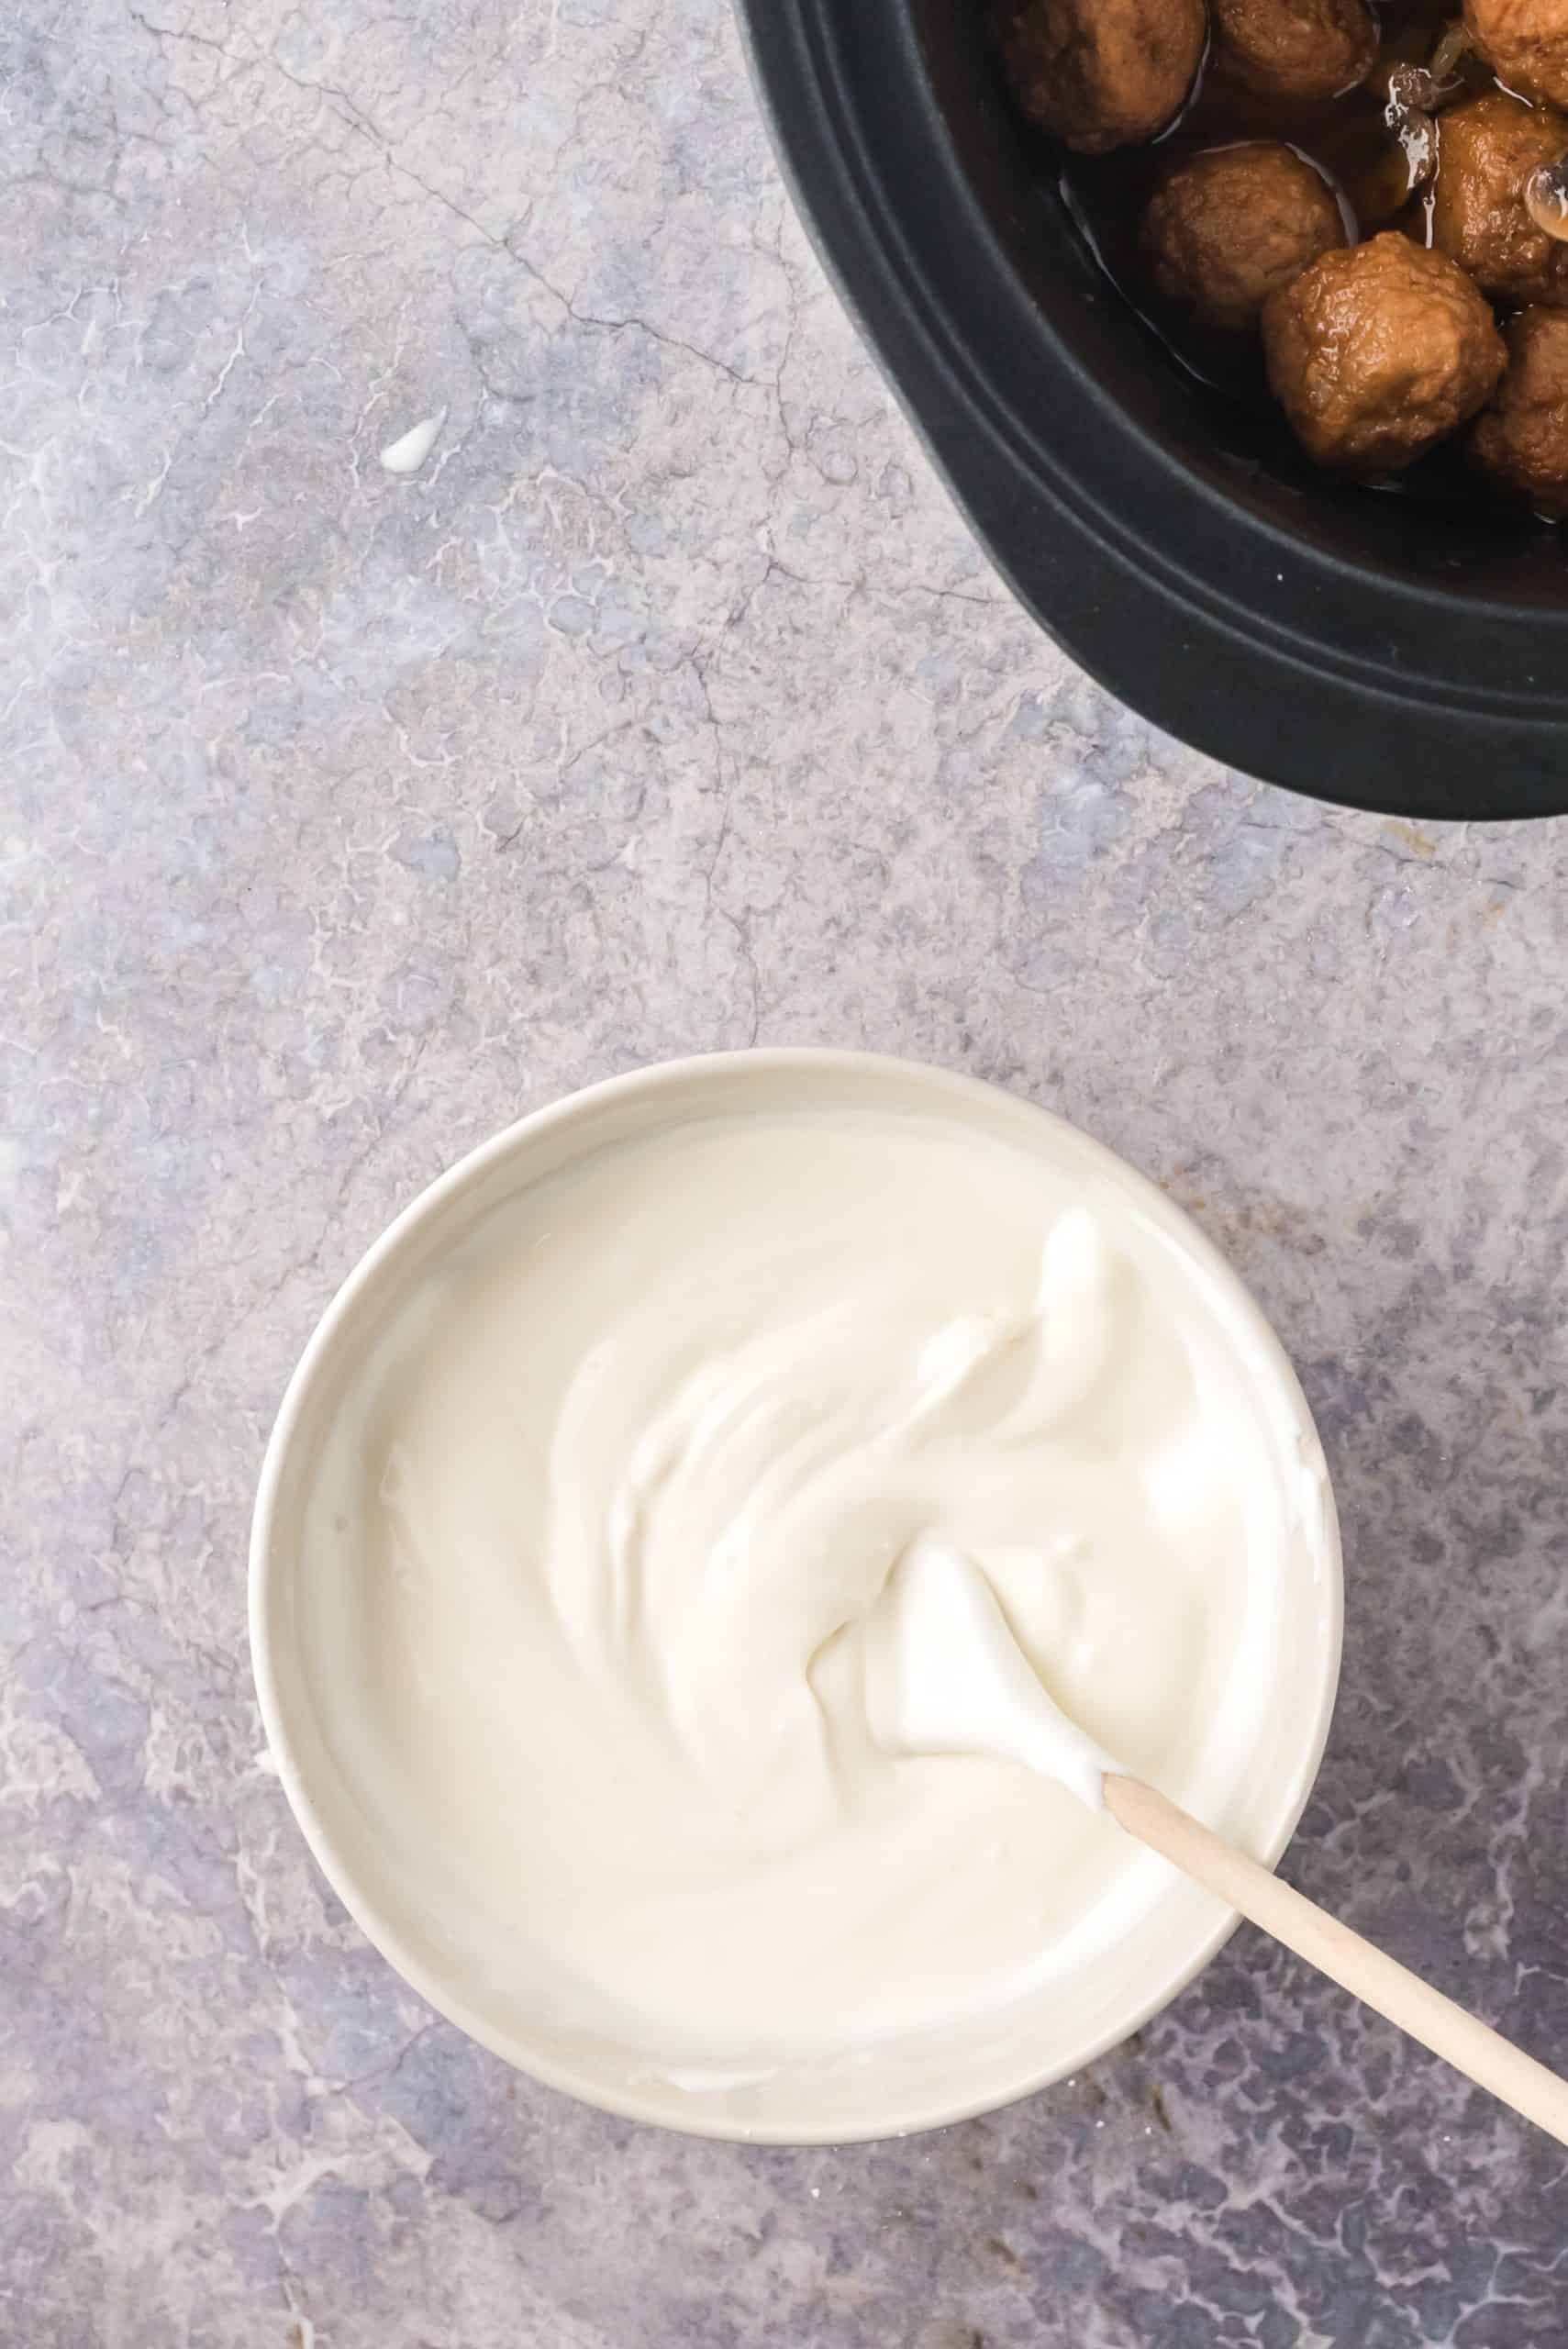 Cream mixture stirred up in bowl